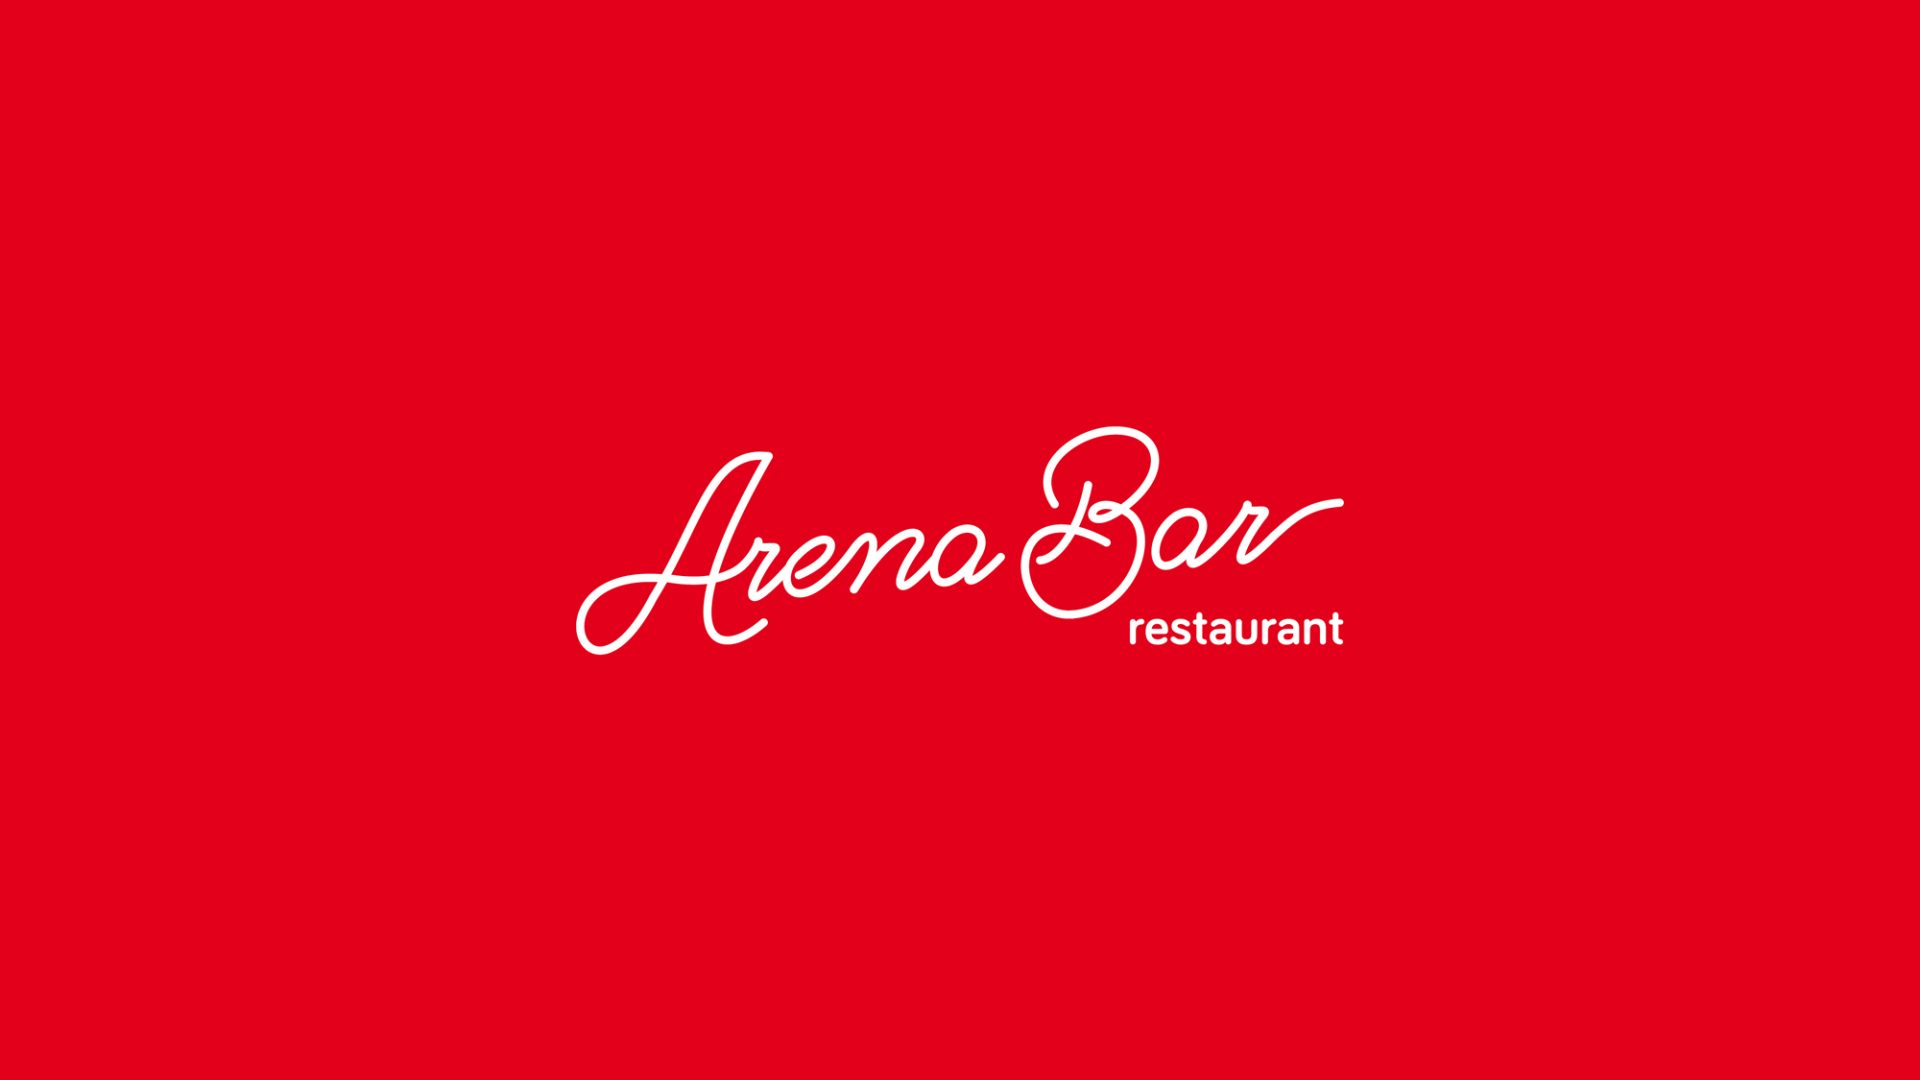 Arena Bar Restaurant - logo